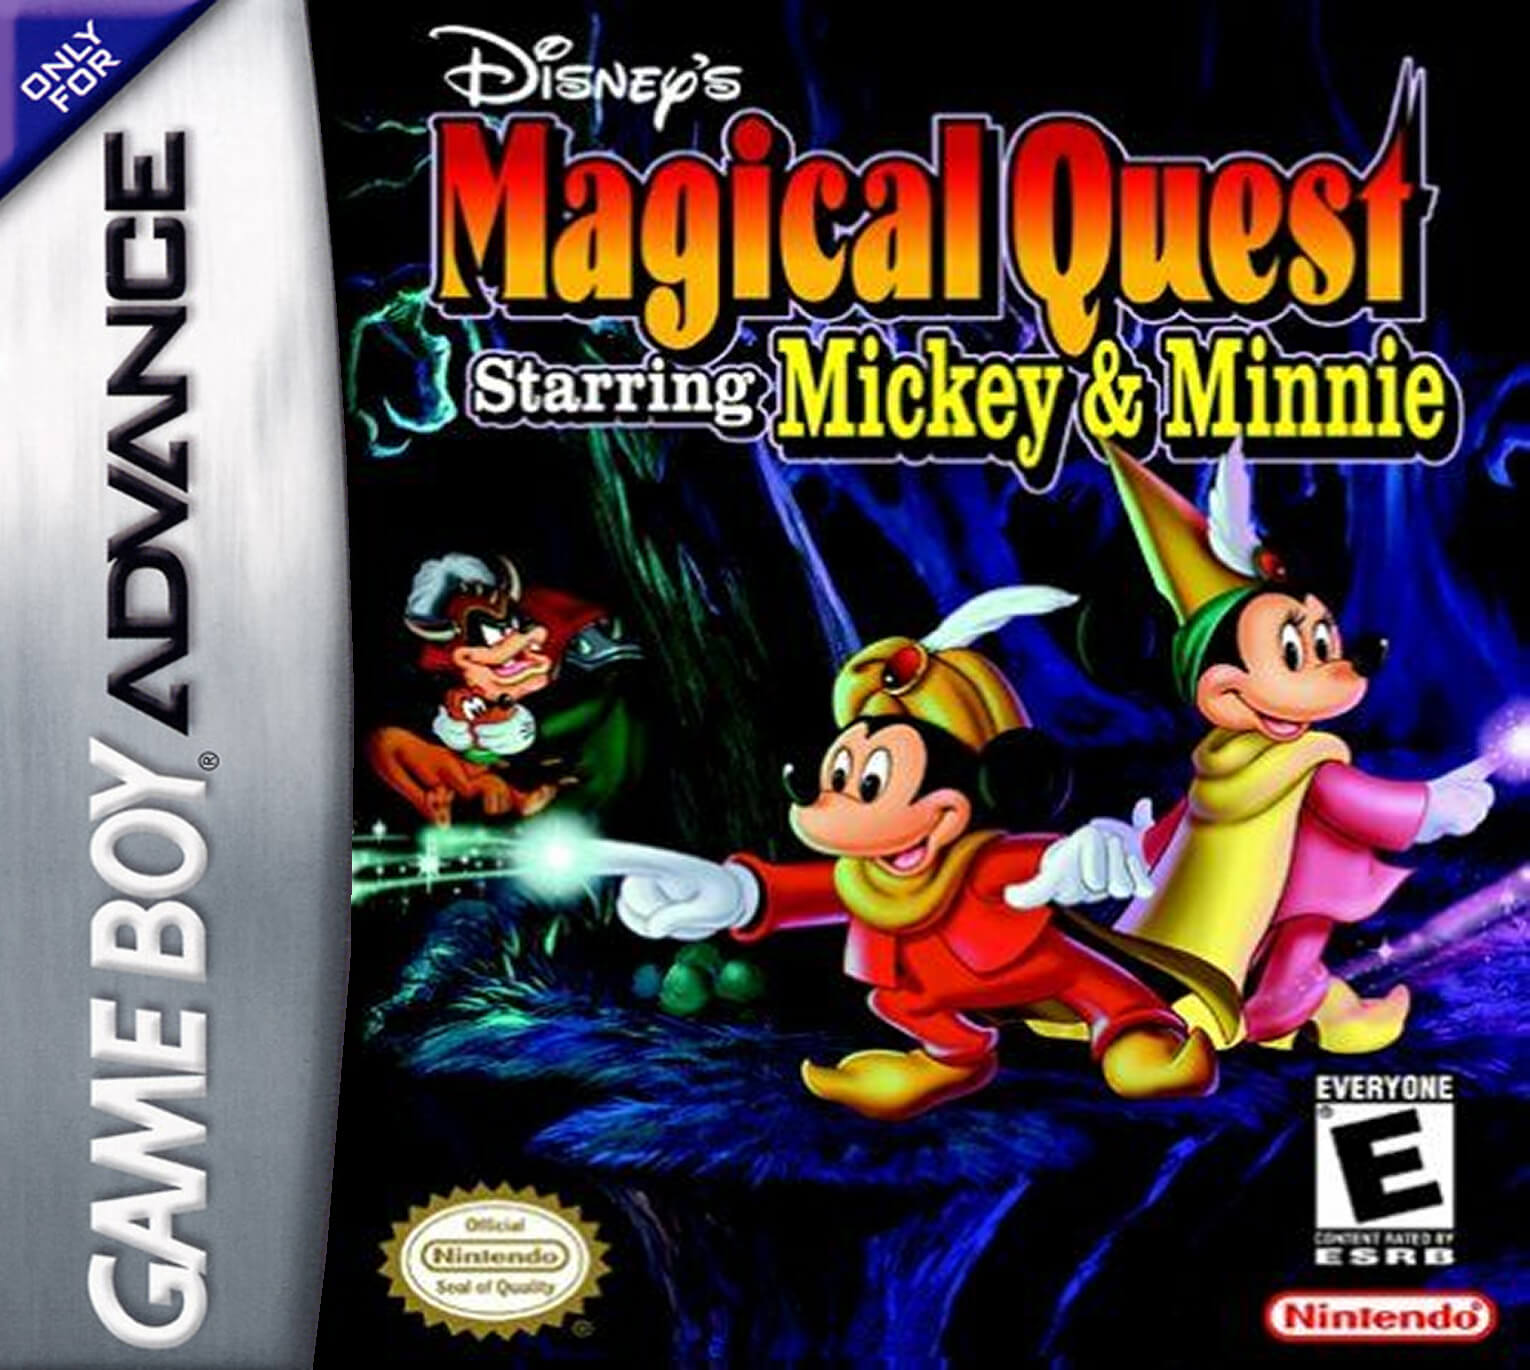 Disney’s Magical Quest Starring Mickey & Minnie